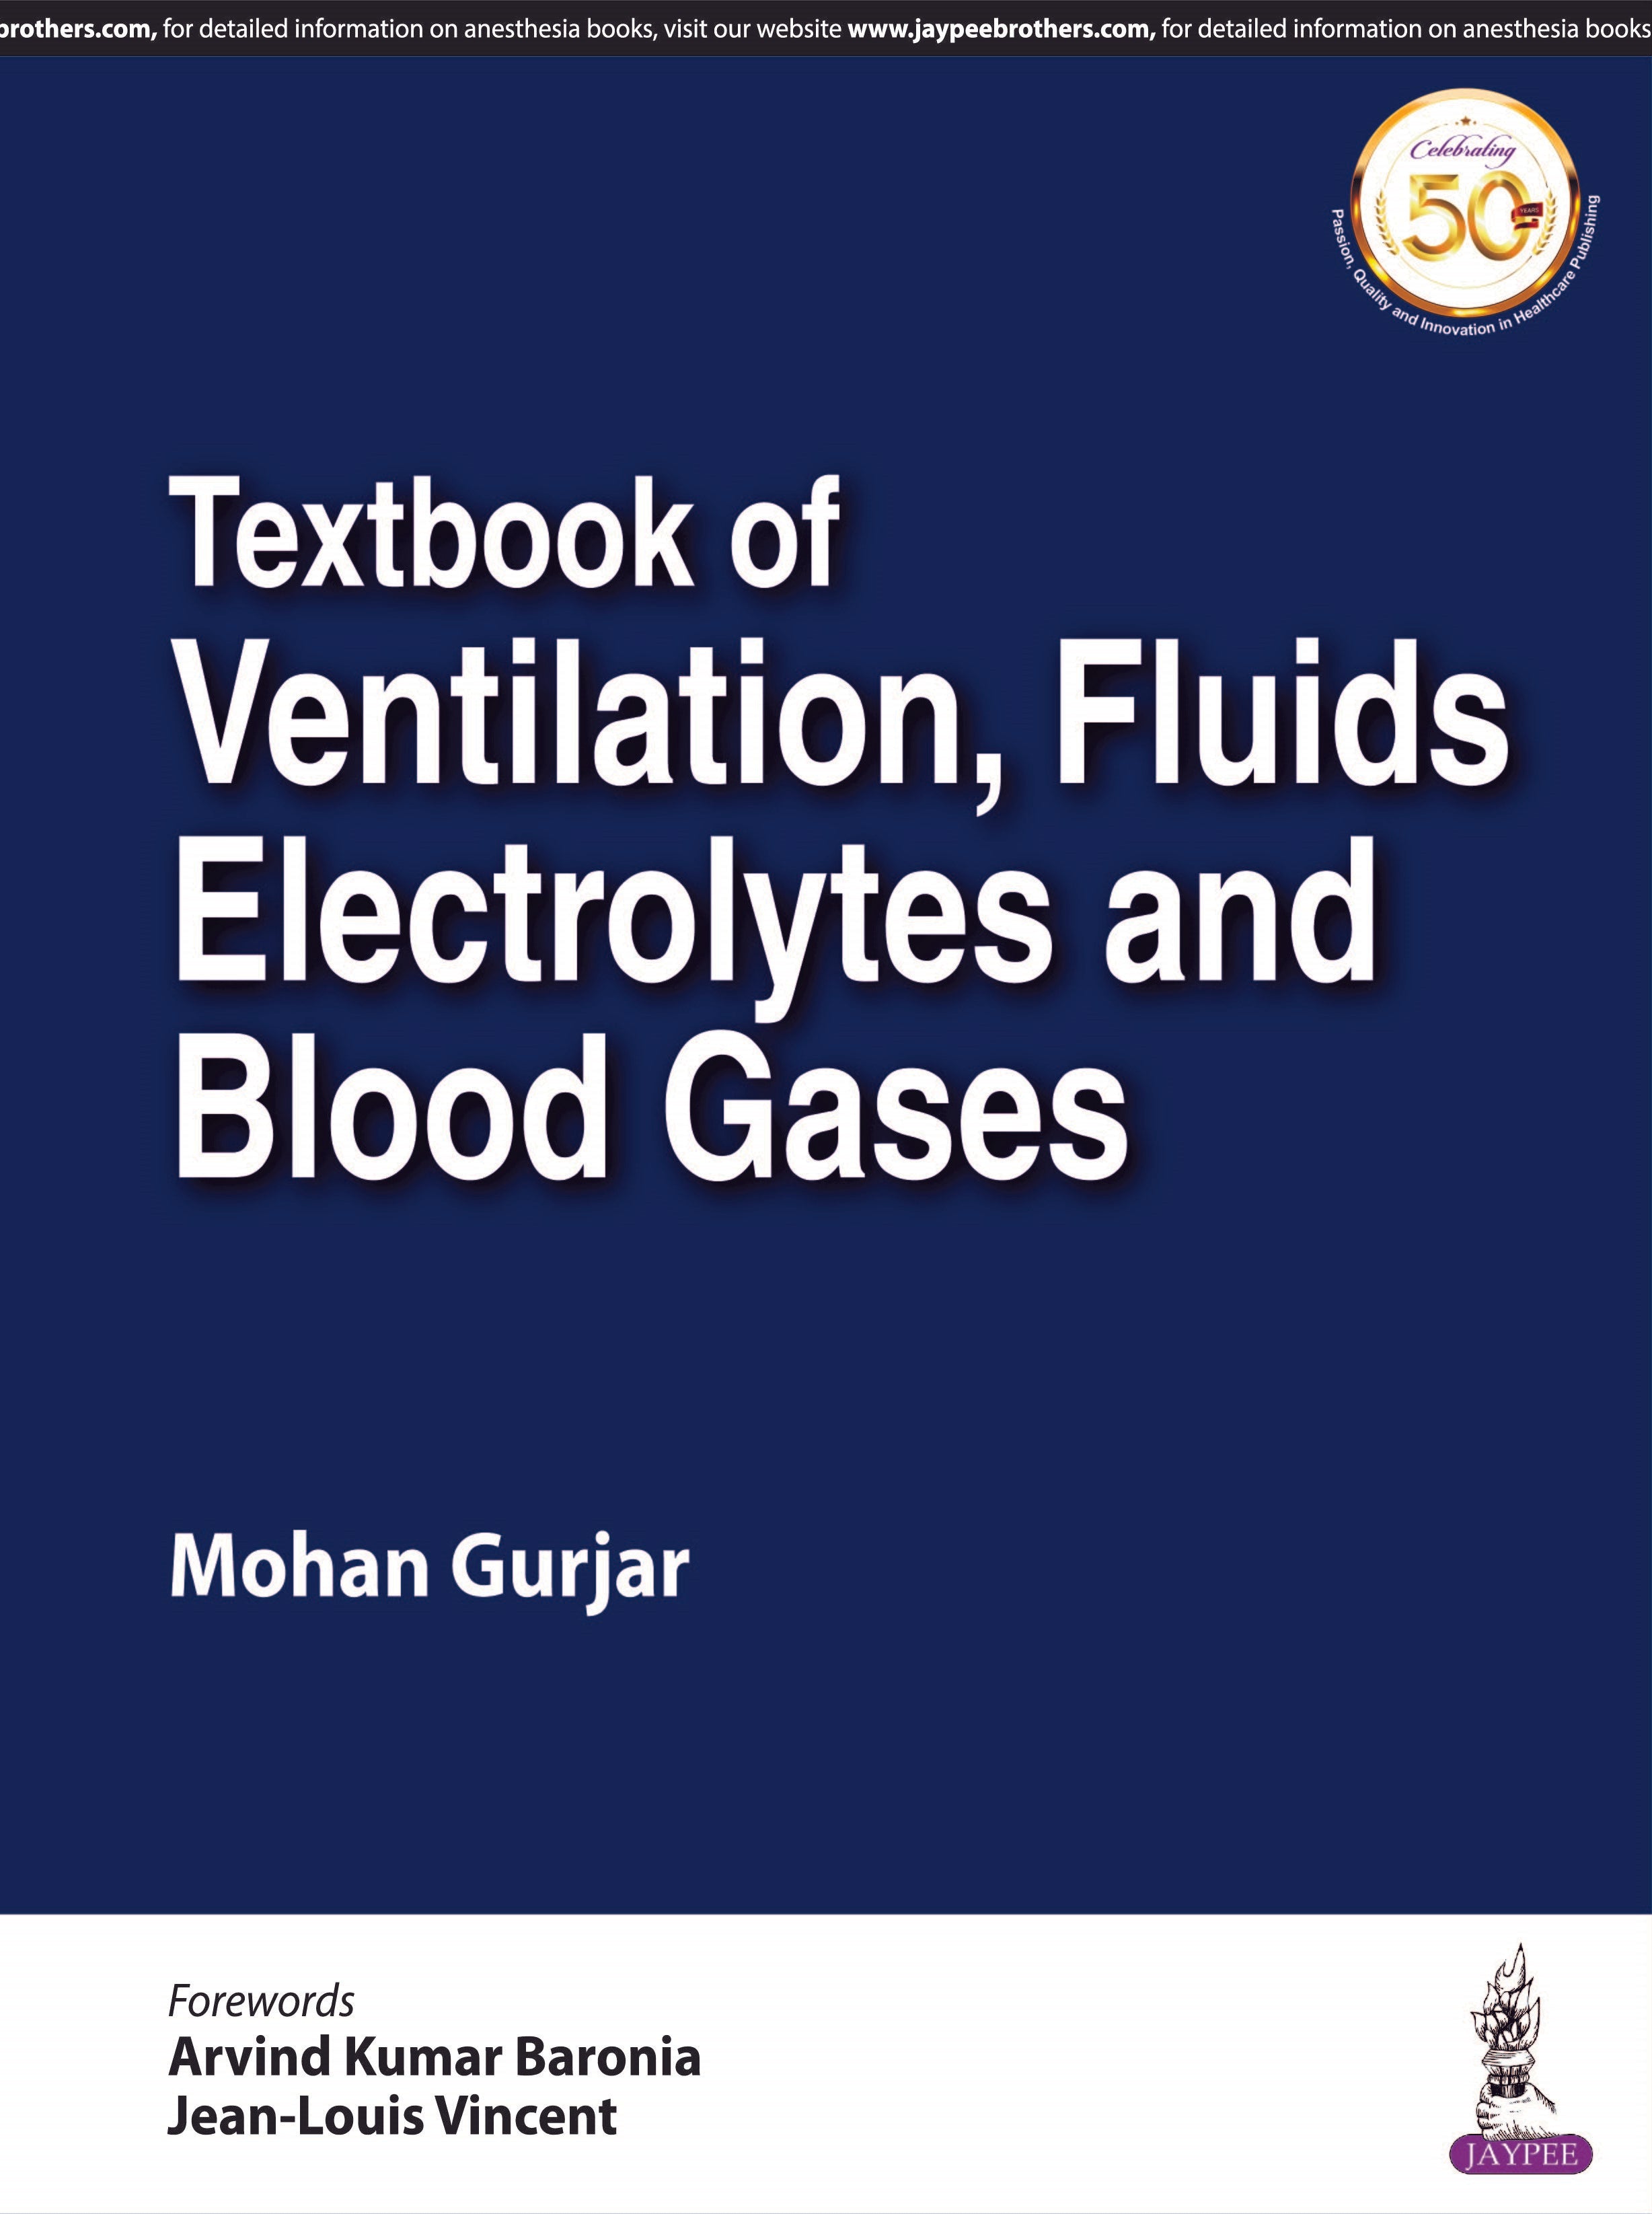 TEXTBOOK OF VENTILATION, FLUIDS, ELECTROLYTES AND BLOOD GASES,1/E,MOHAN GURJAR